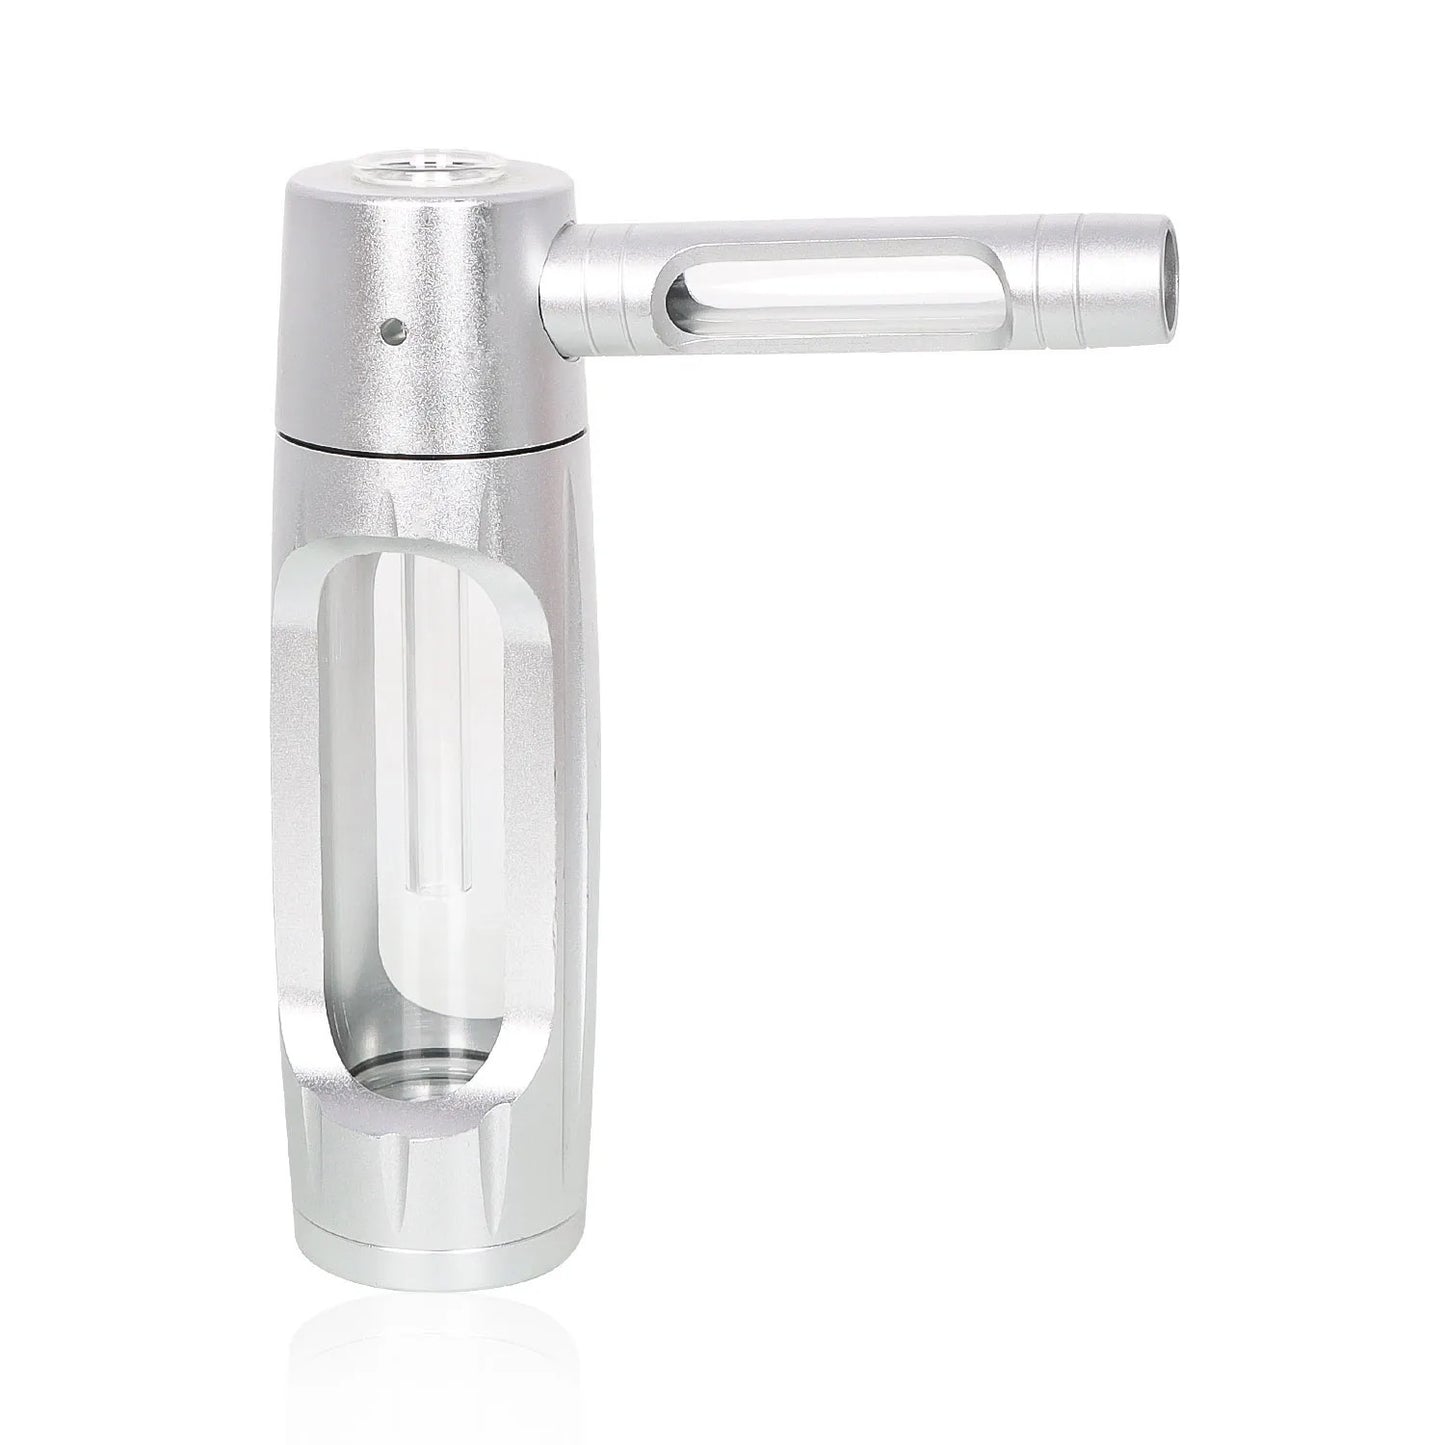 HerbLi™- The Portable Aluminum Alloy Glass Pipe